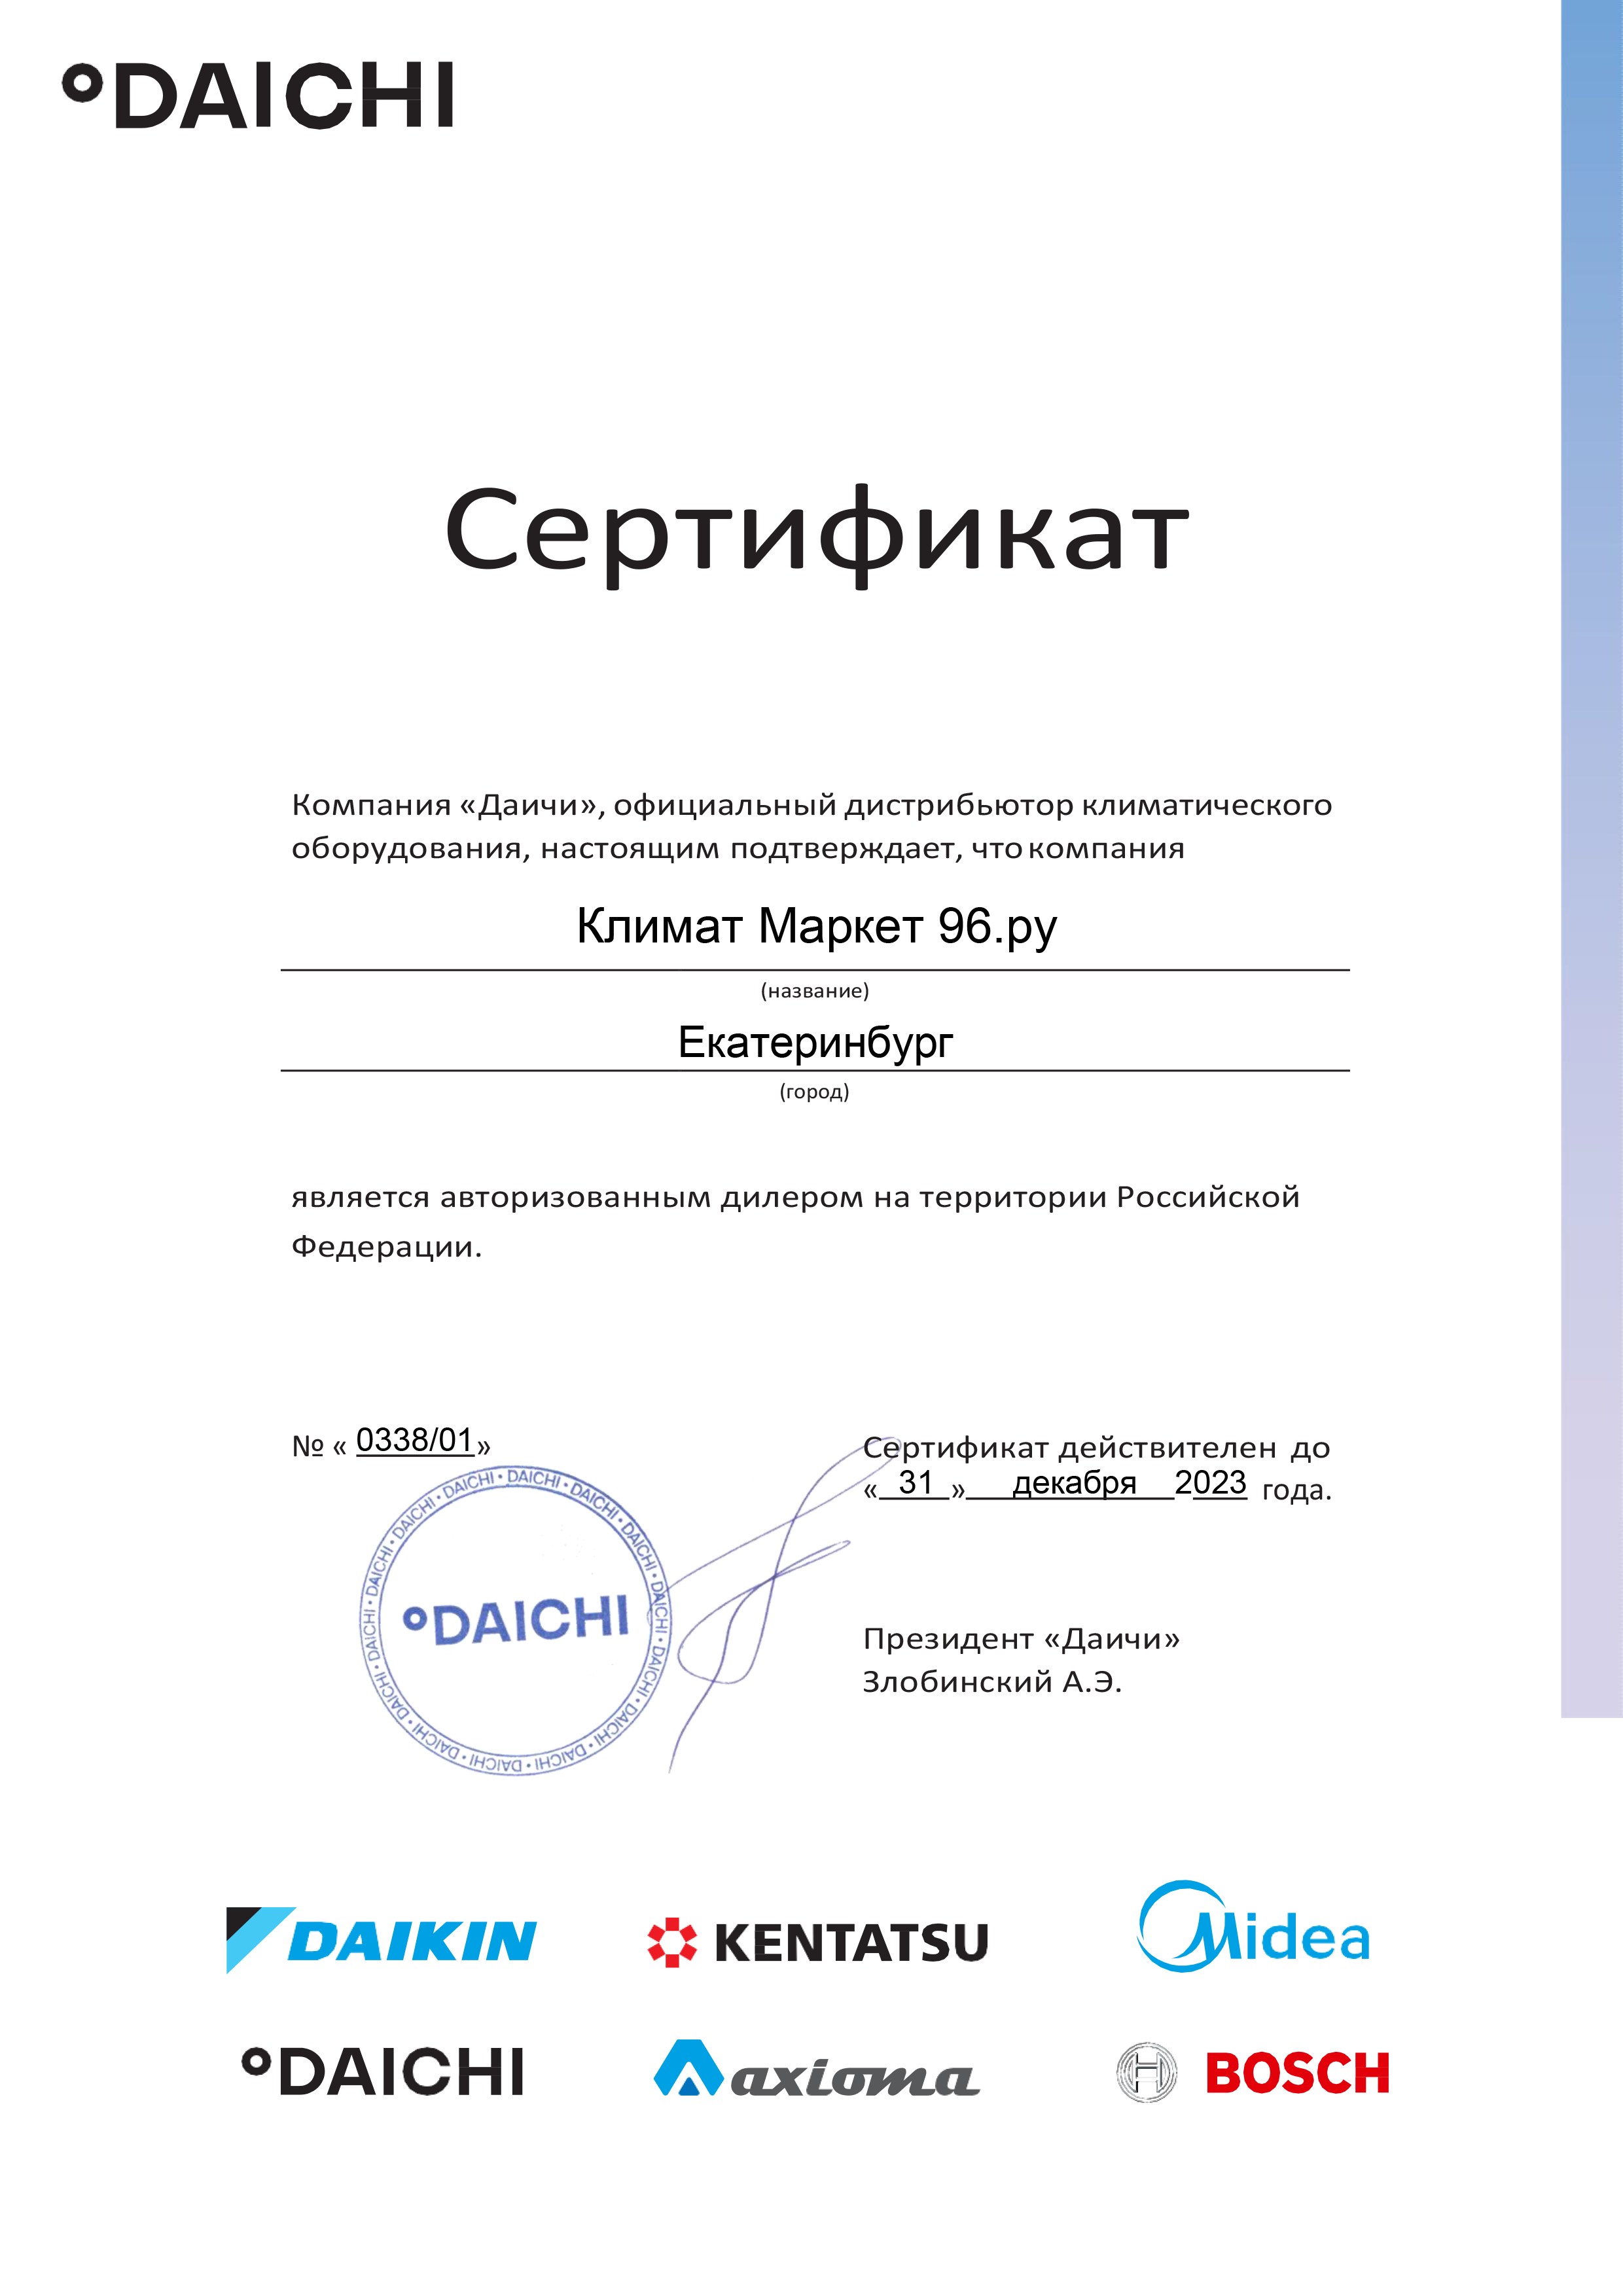 daichi-km96 Kondicioner Daichi AIR25AVQ1/AIR25FV1 kypit v Ekaterinbyrge v internet-magazine KlimatMarket96.ry Сертификат дилера